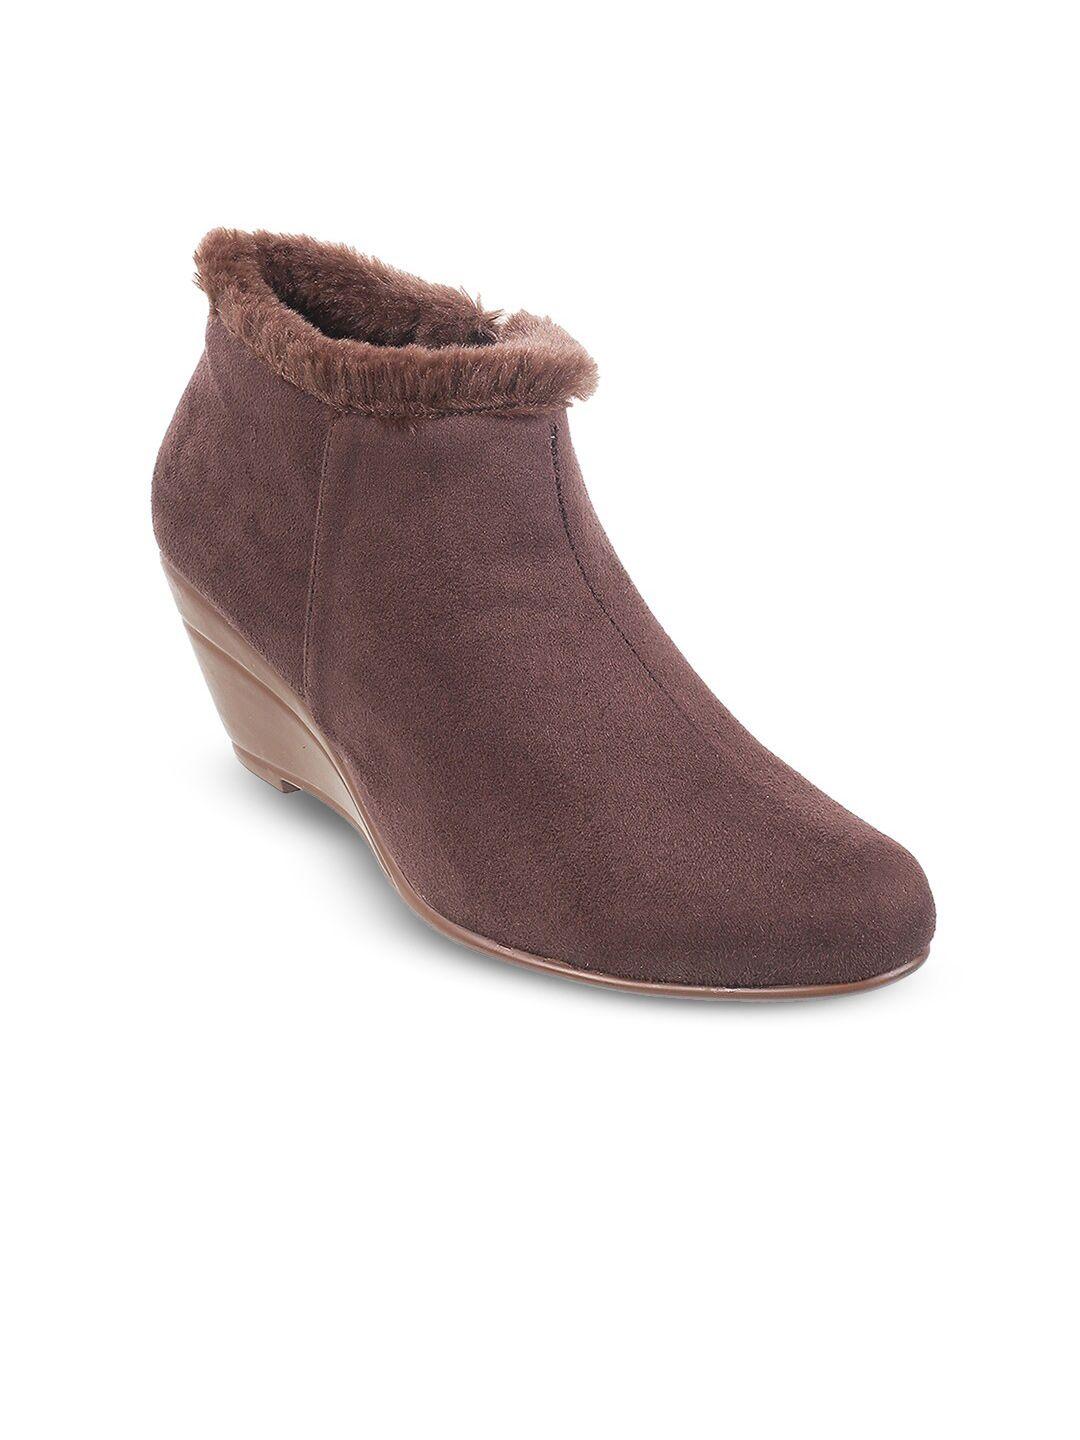 mochi-wedge-heels-winter-boots